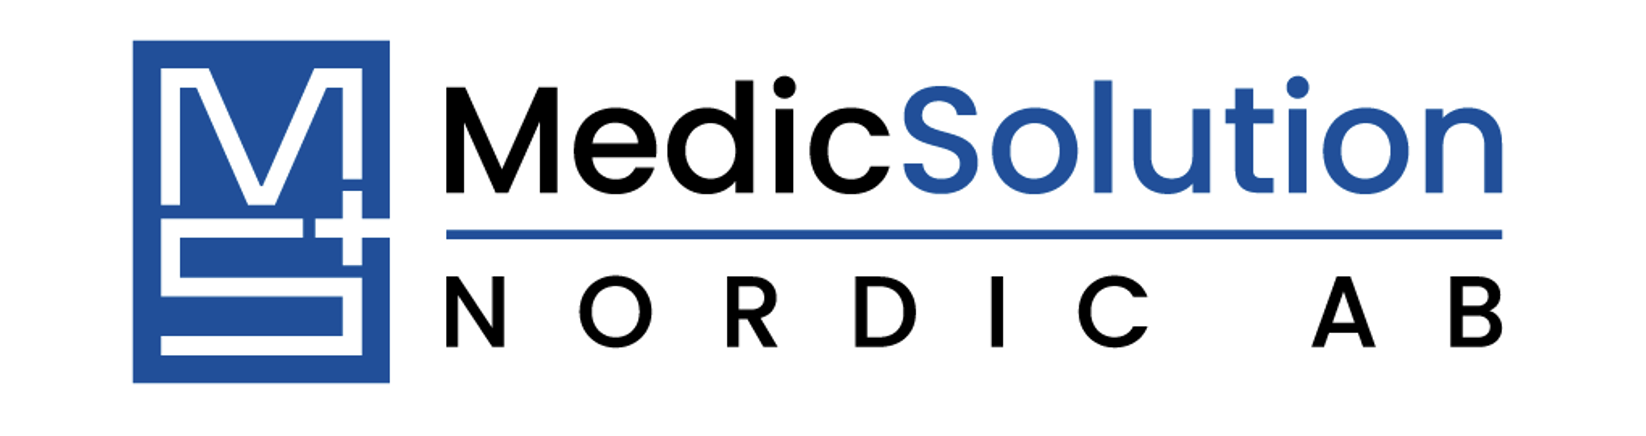 medicsolution nordic ab logotyp